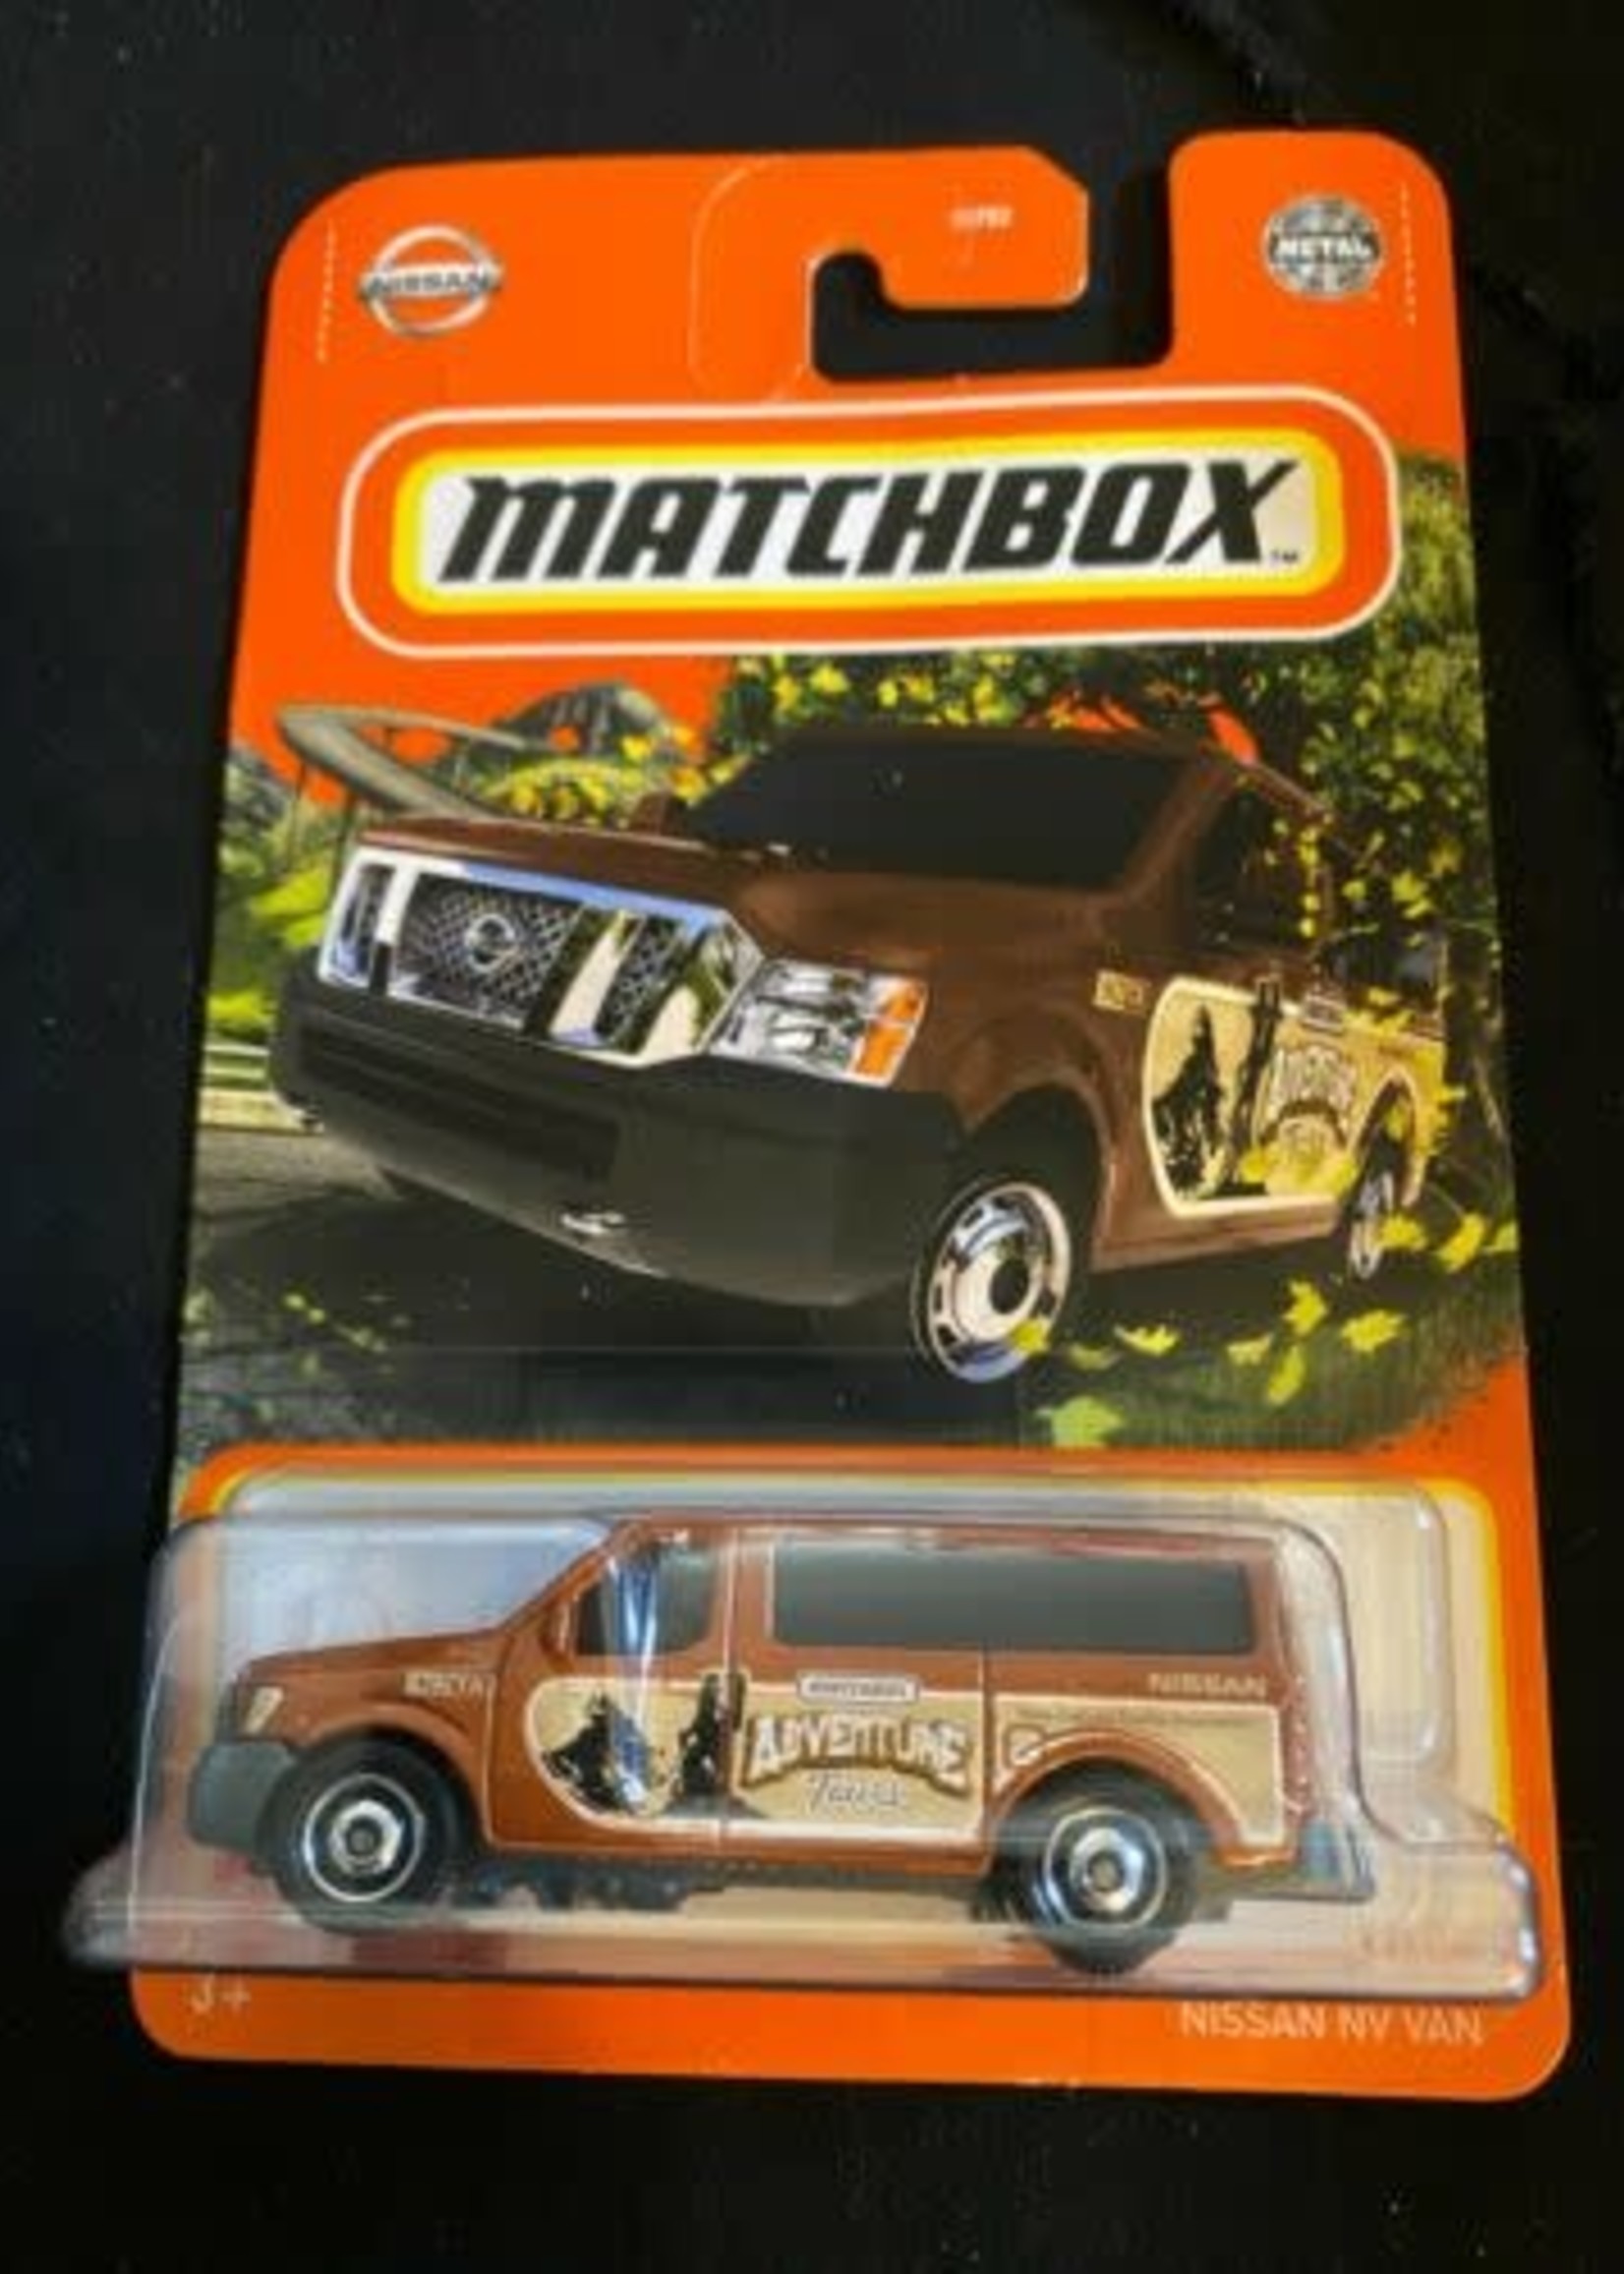 Mattel Matchbox Car: Nissan NV Van